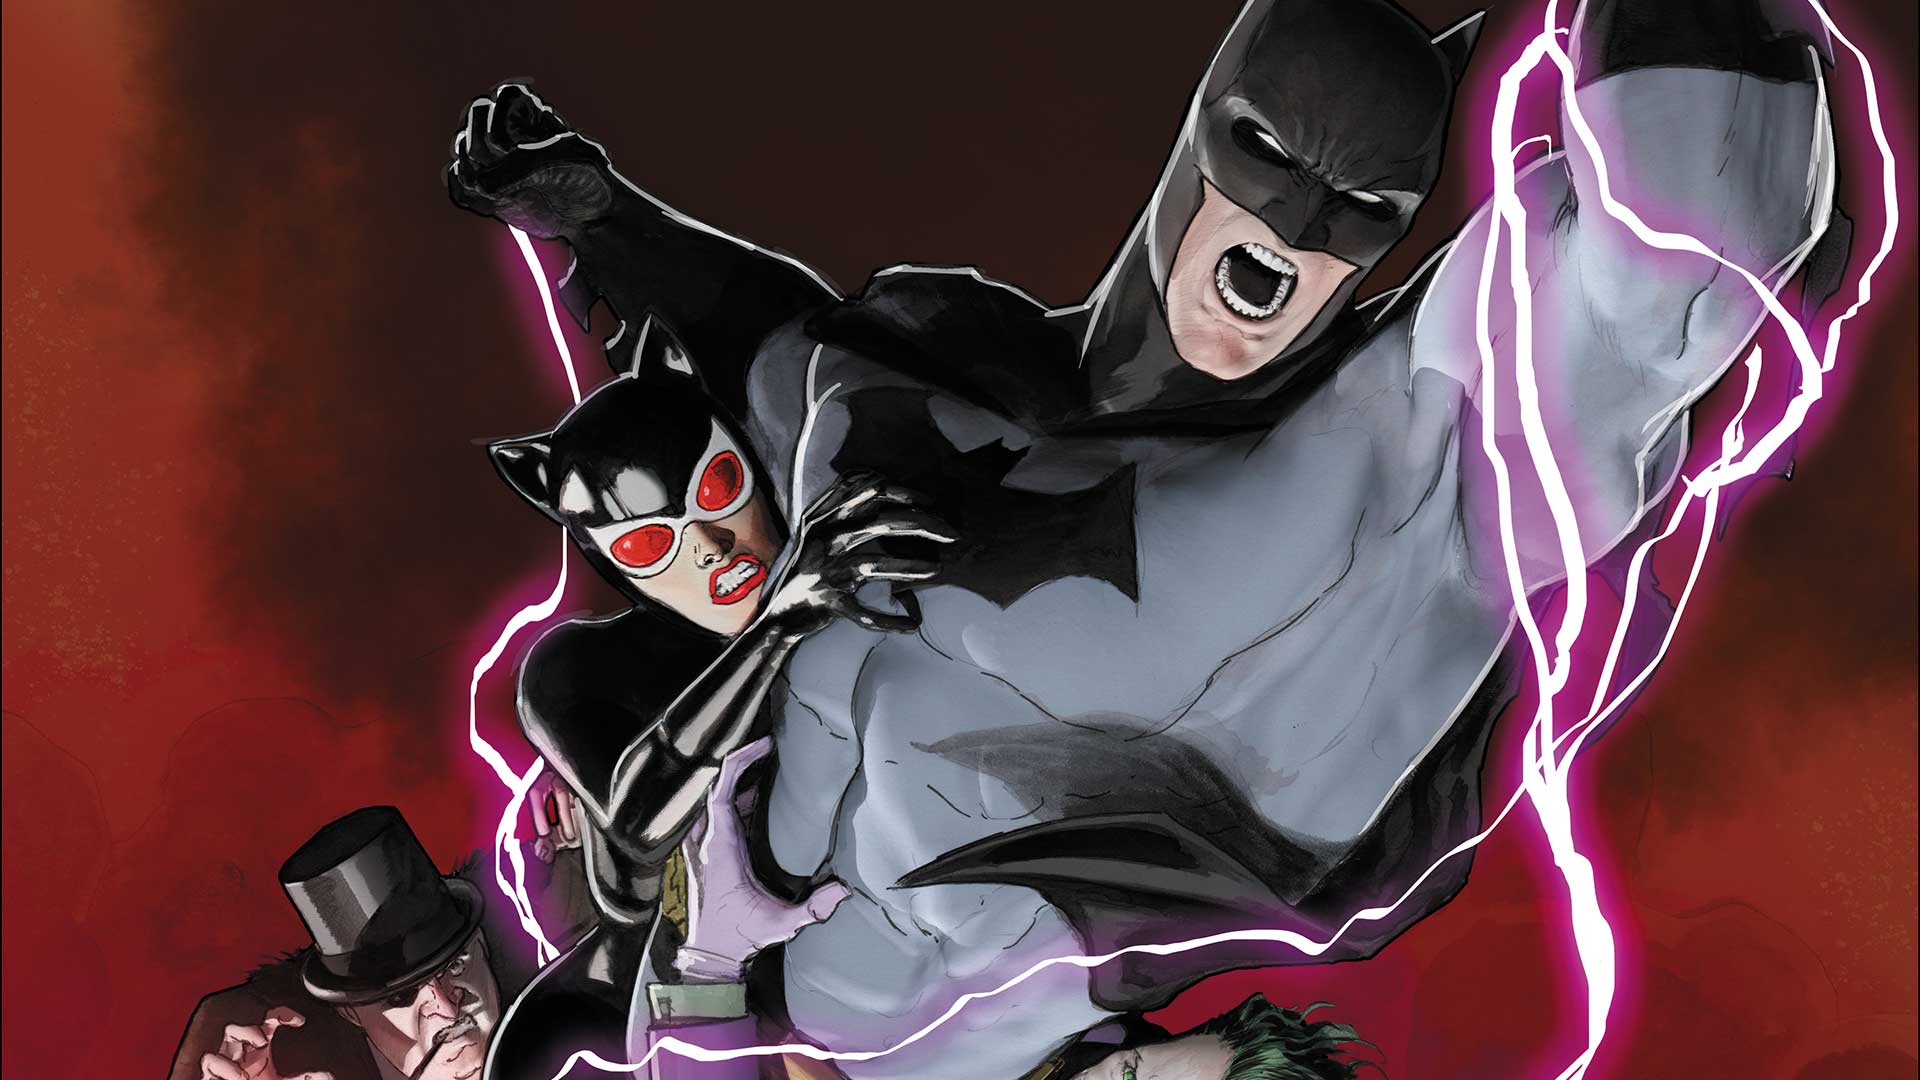 Batman #66 Review: Questionable storytelling